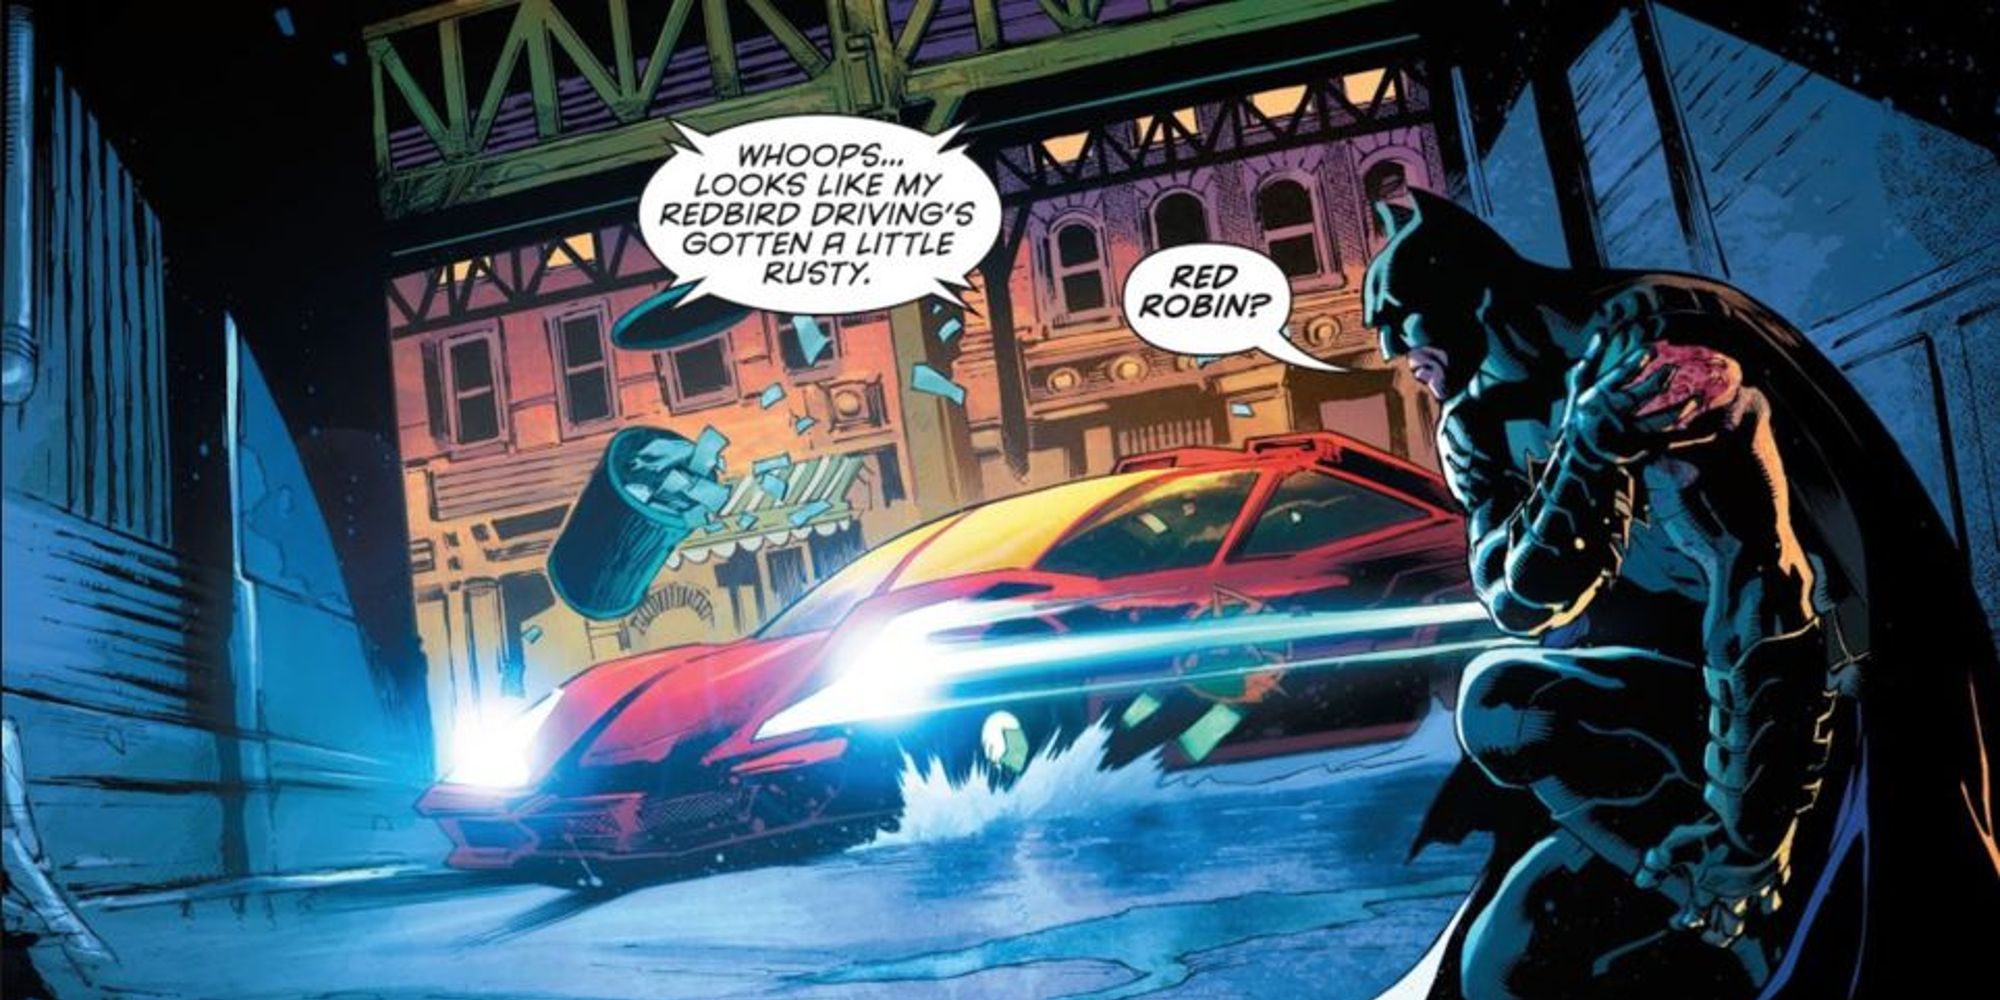 Tim Drake driving the Redbird car up to Batman in Batman comics